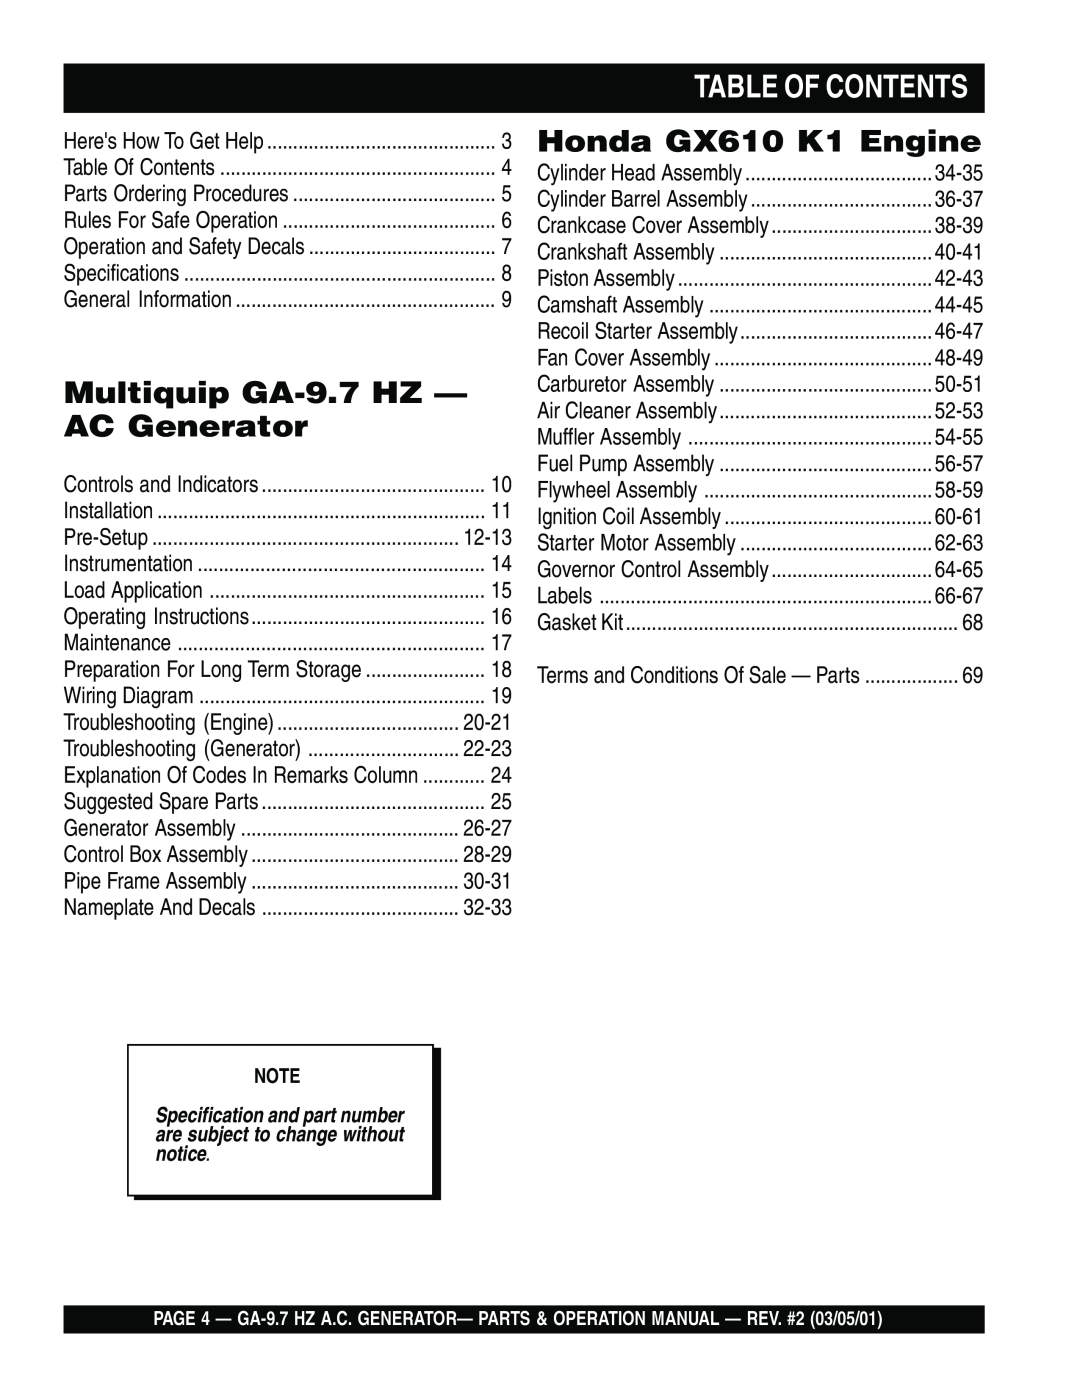 Multiquip GA-9.7 HZ operation manual Table Of Contents, Multiquip GA-9.7HZ — AC Generator, Honda GX610 K1 Engine 